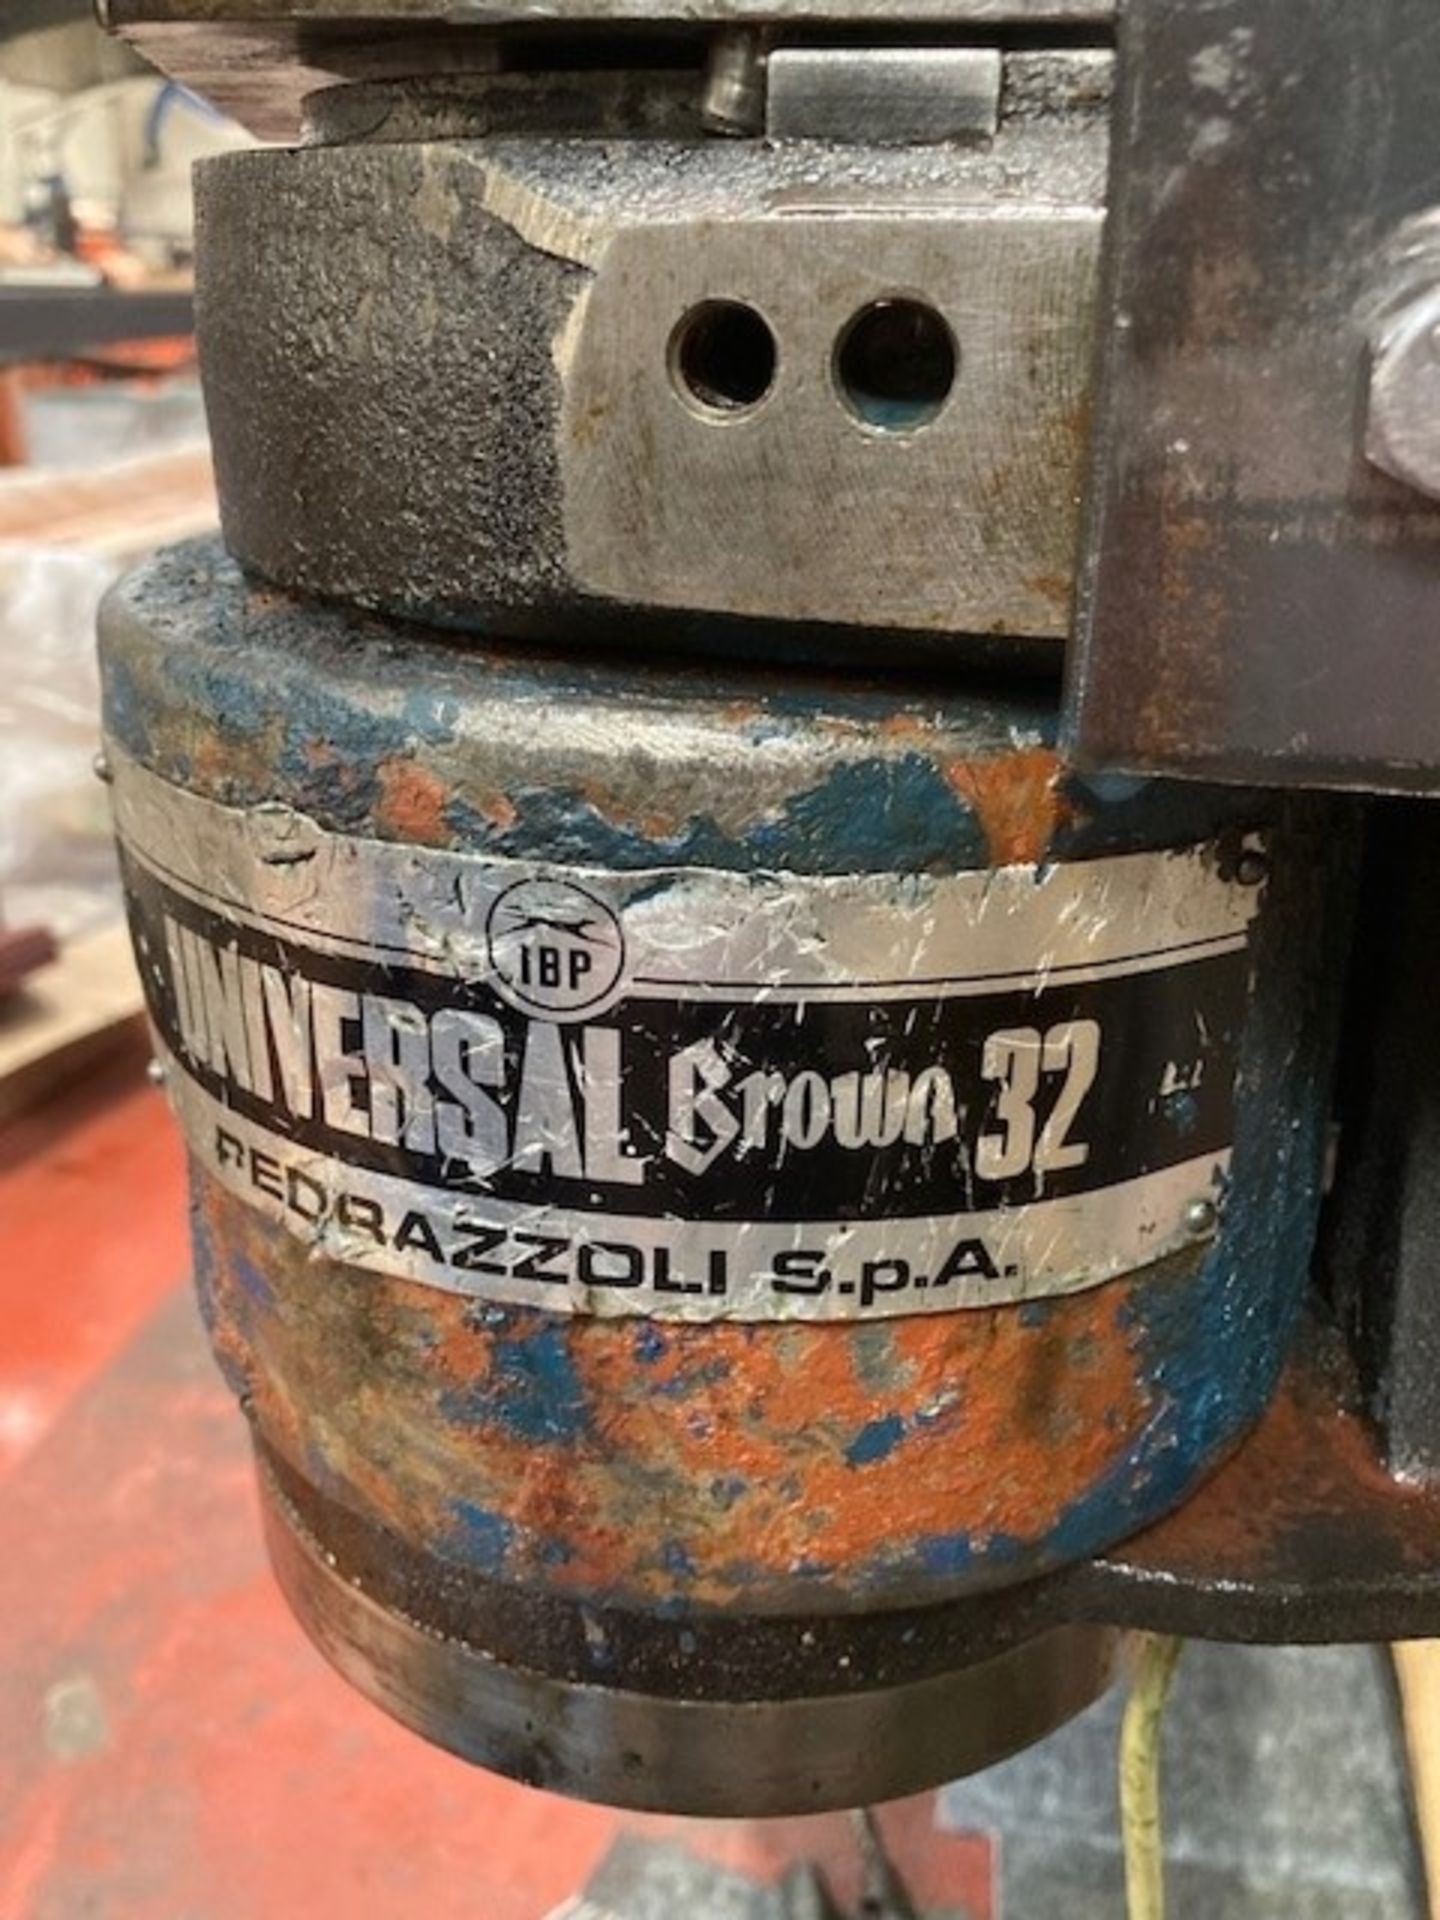 Pedrazzoli Universal Brown 32 Mandrel Type Tube Bender - Image 5 of 7